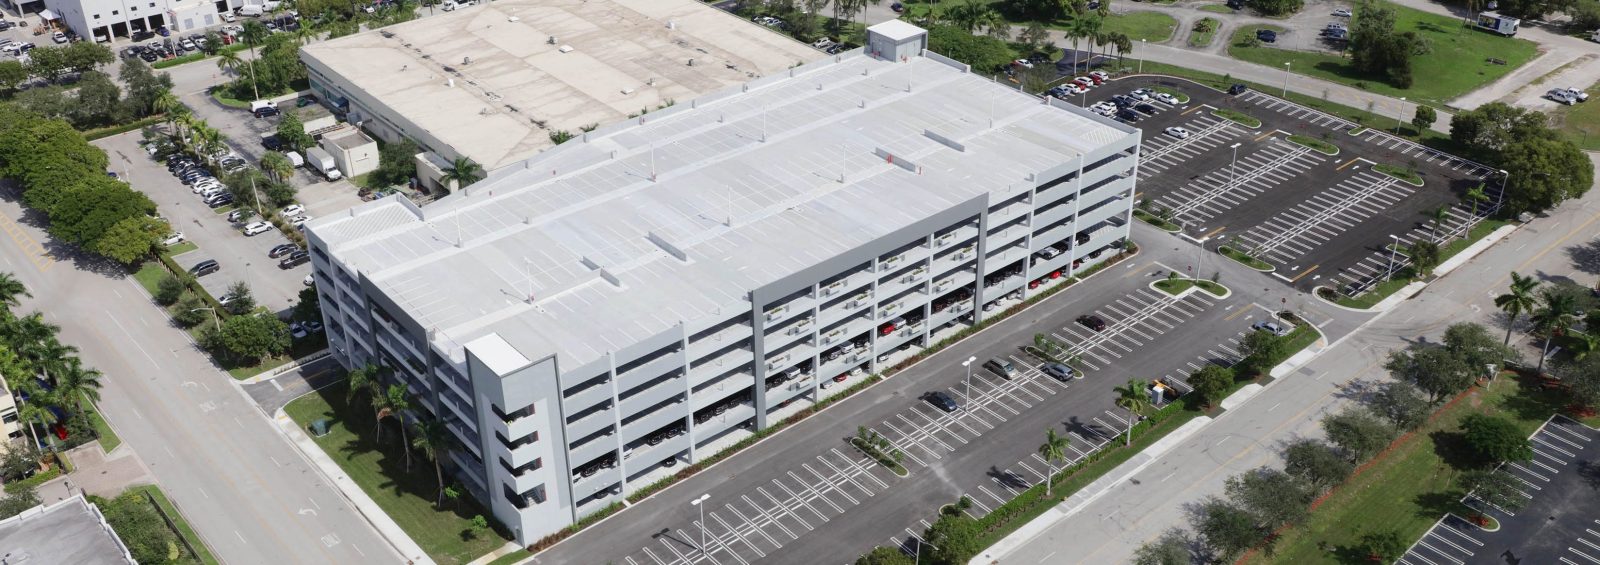 Miami-Lakes-Auto-Mall-Parking-Garage-FINAL-scaled-aspect-ratio-2550-900